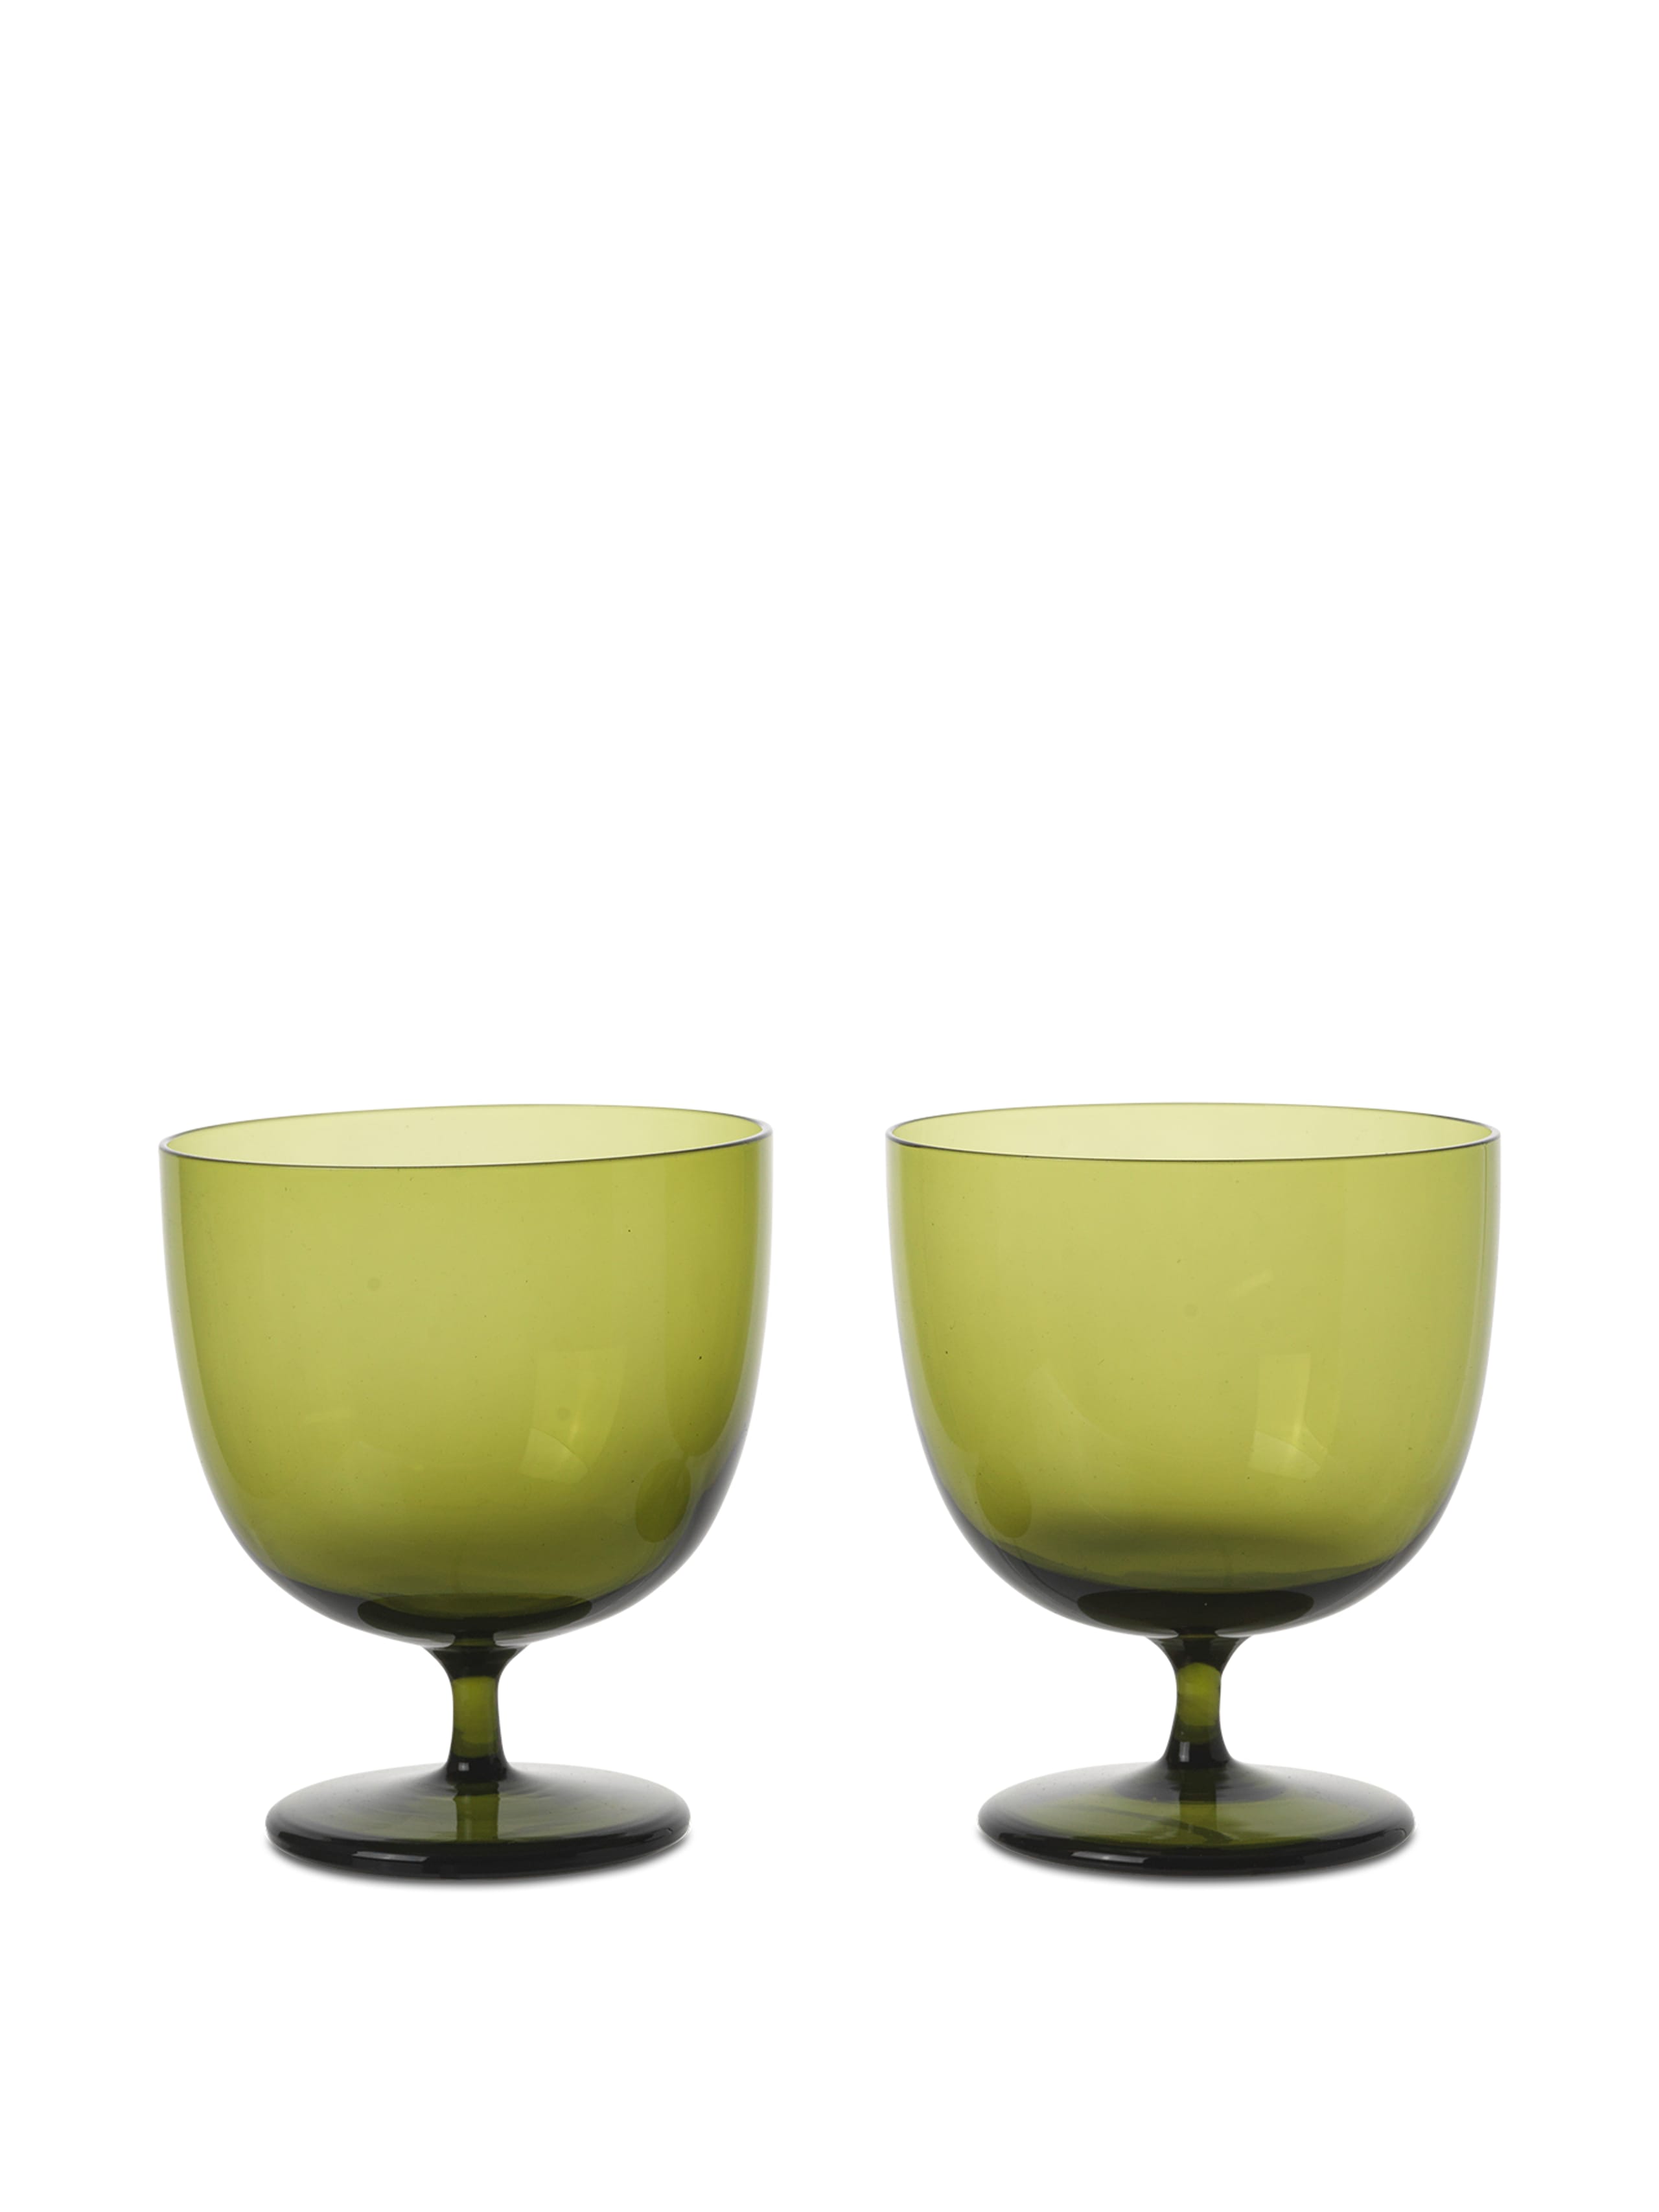 Ferm Living - Glas - Host Water Glasses - Host Water Glasses - Set of 2 - Moss Green